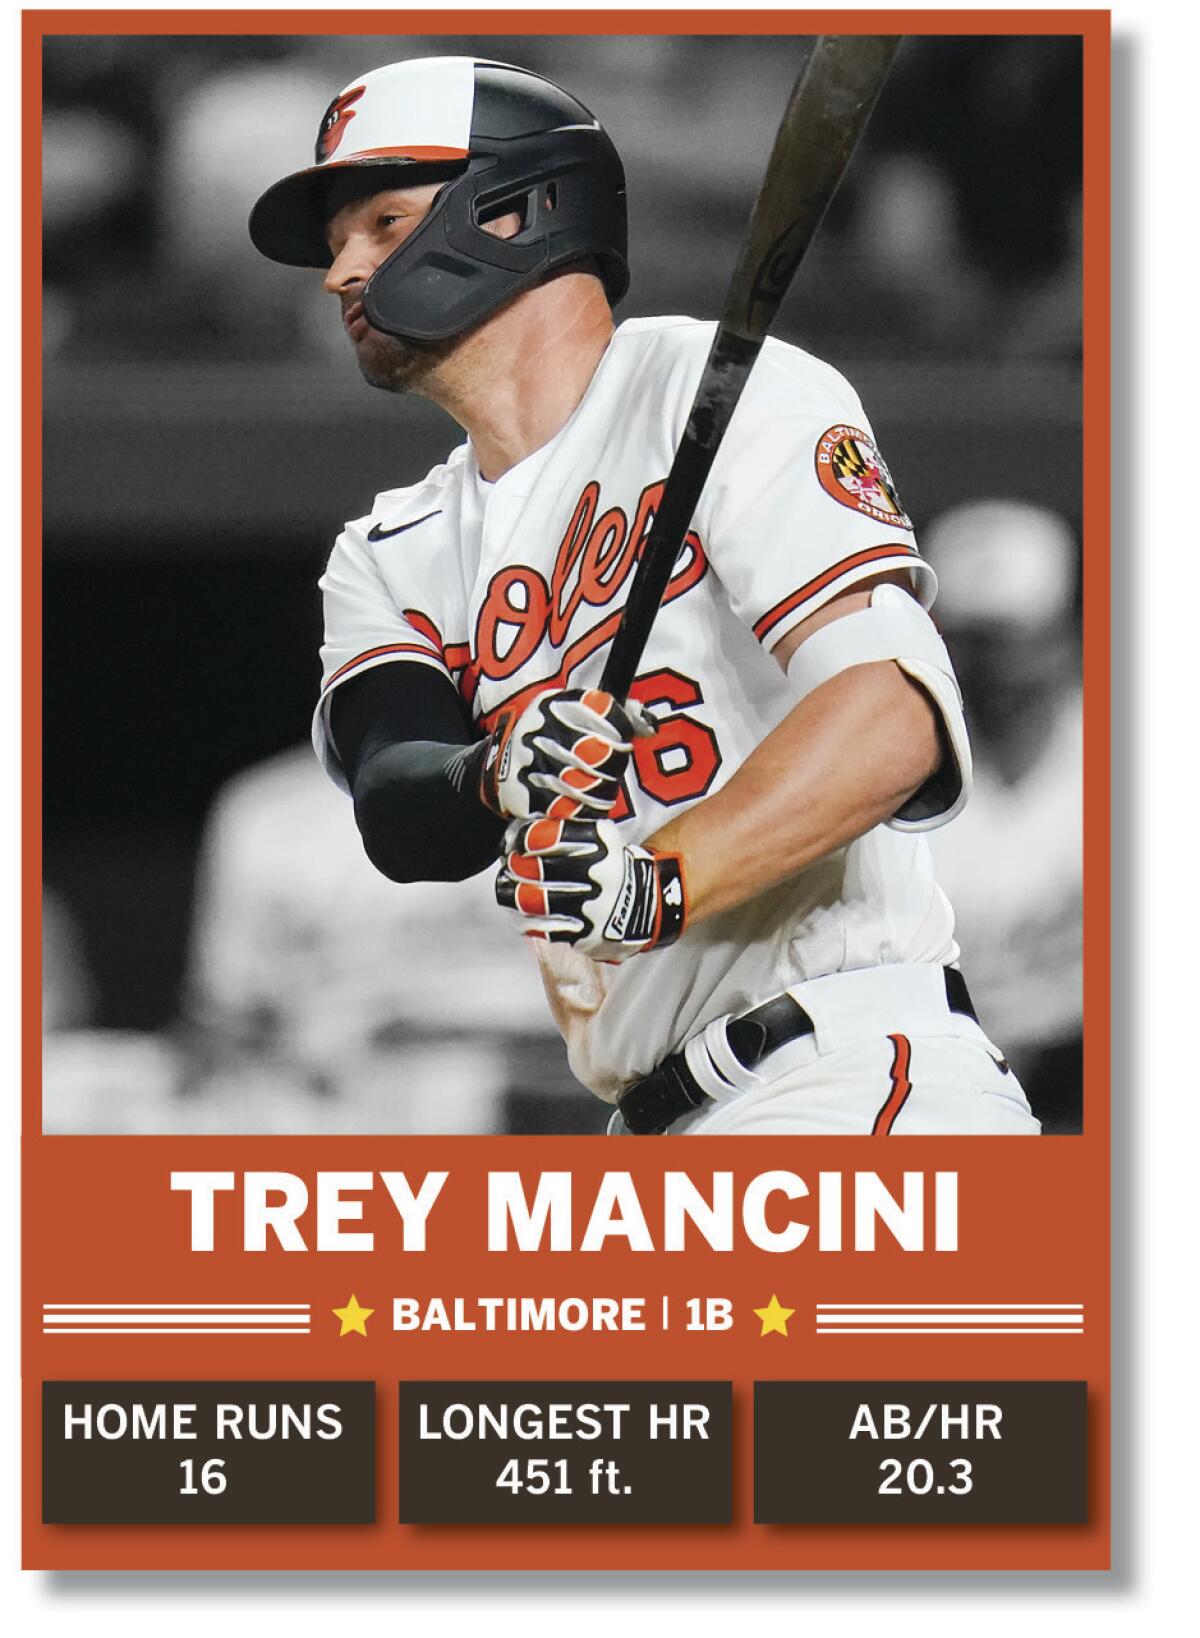 Baltimore Orioles home run derby competitor Trey Mancini.